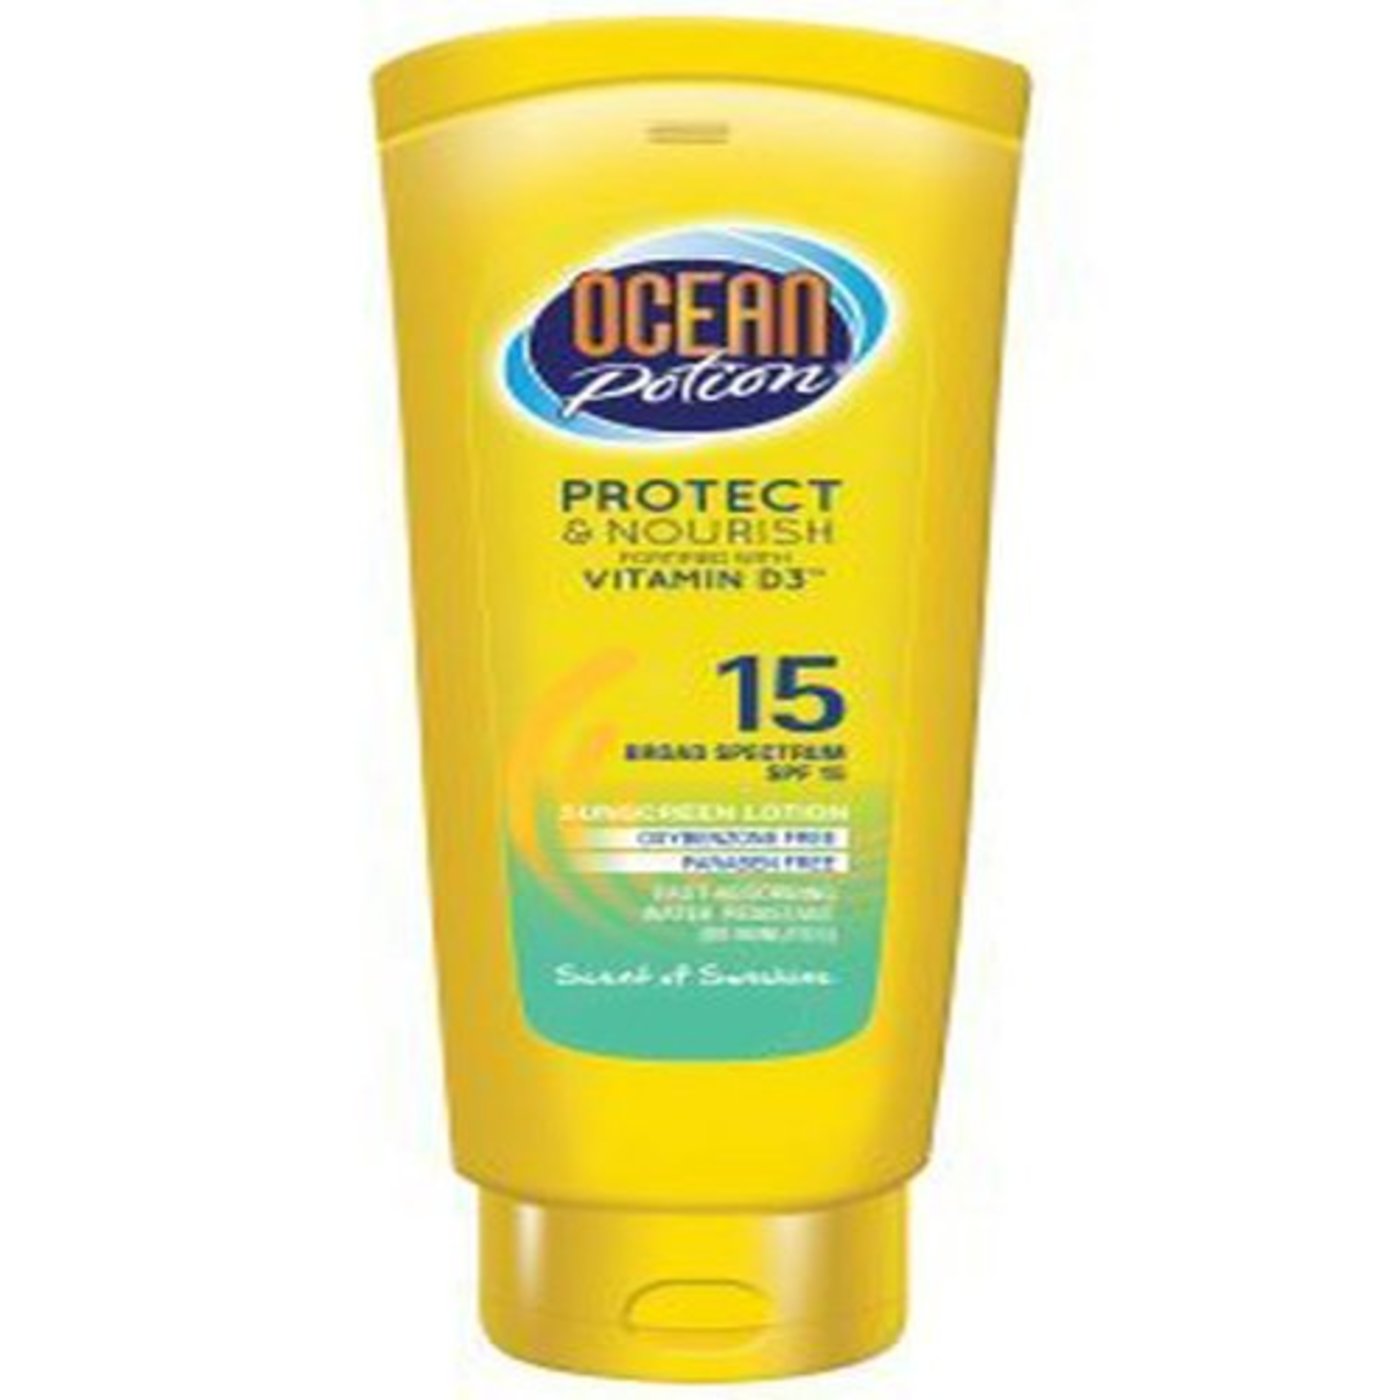 Ocean Potion Suncare Protect Nourish Sunscreen, SPF 15 3